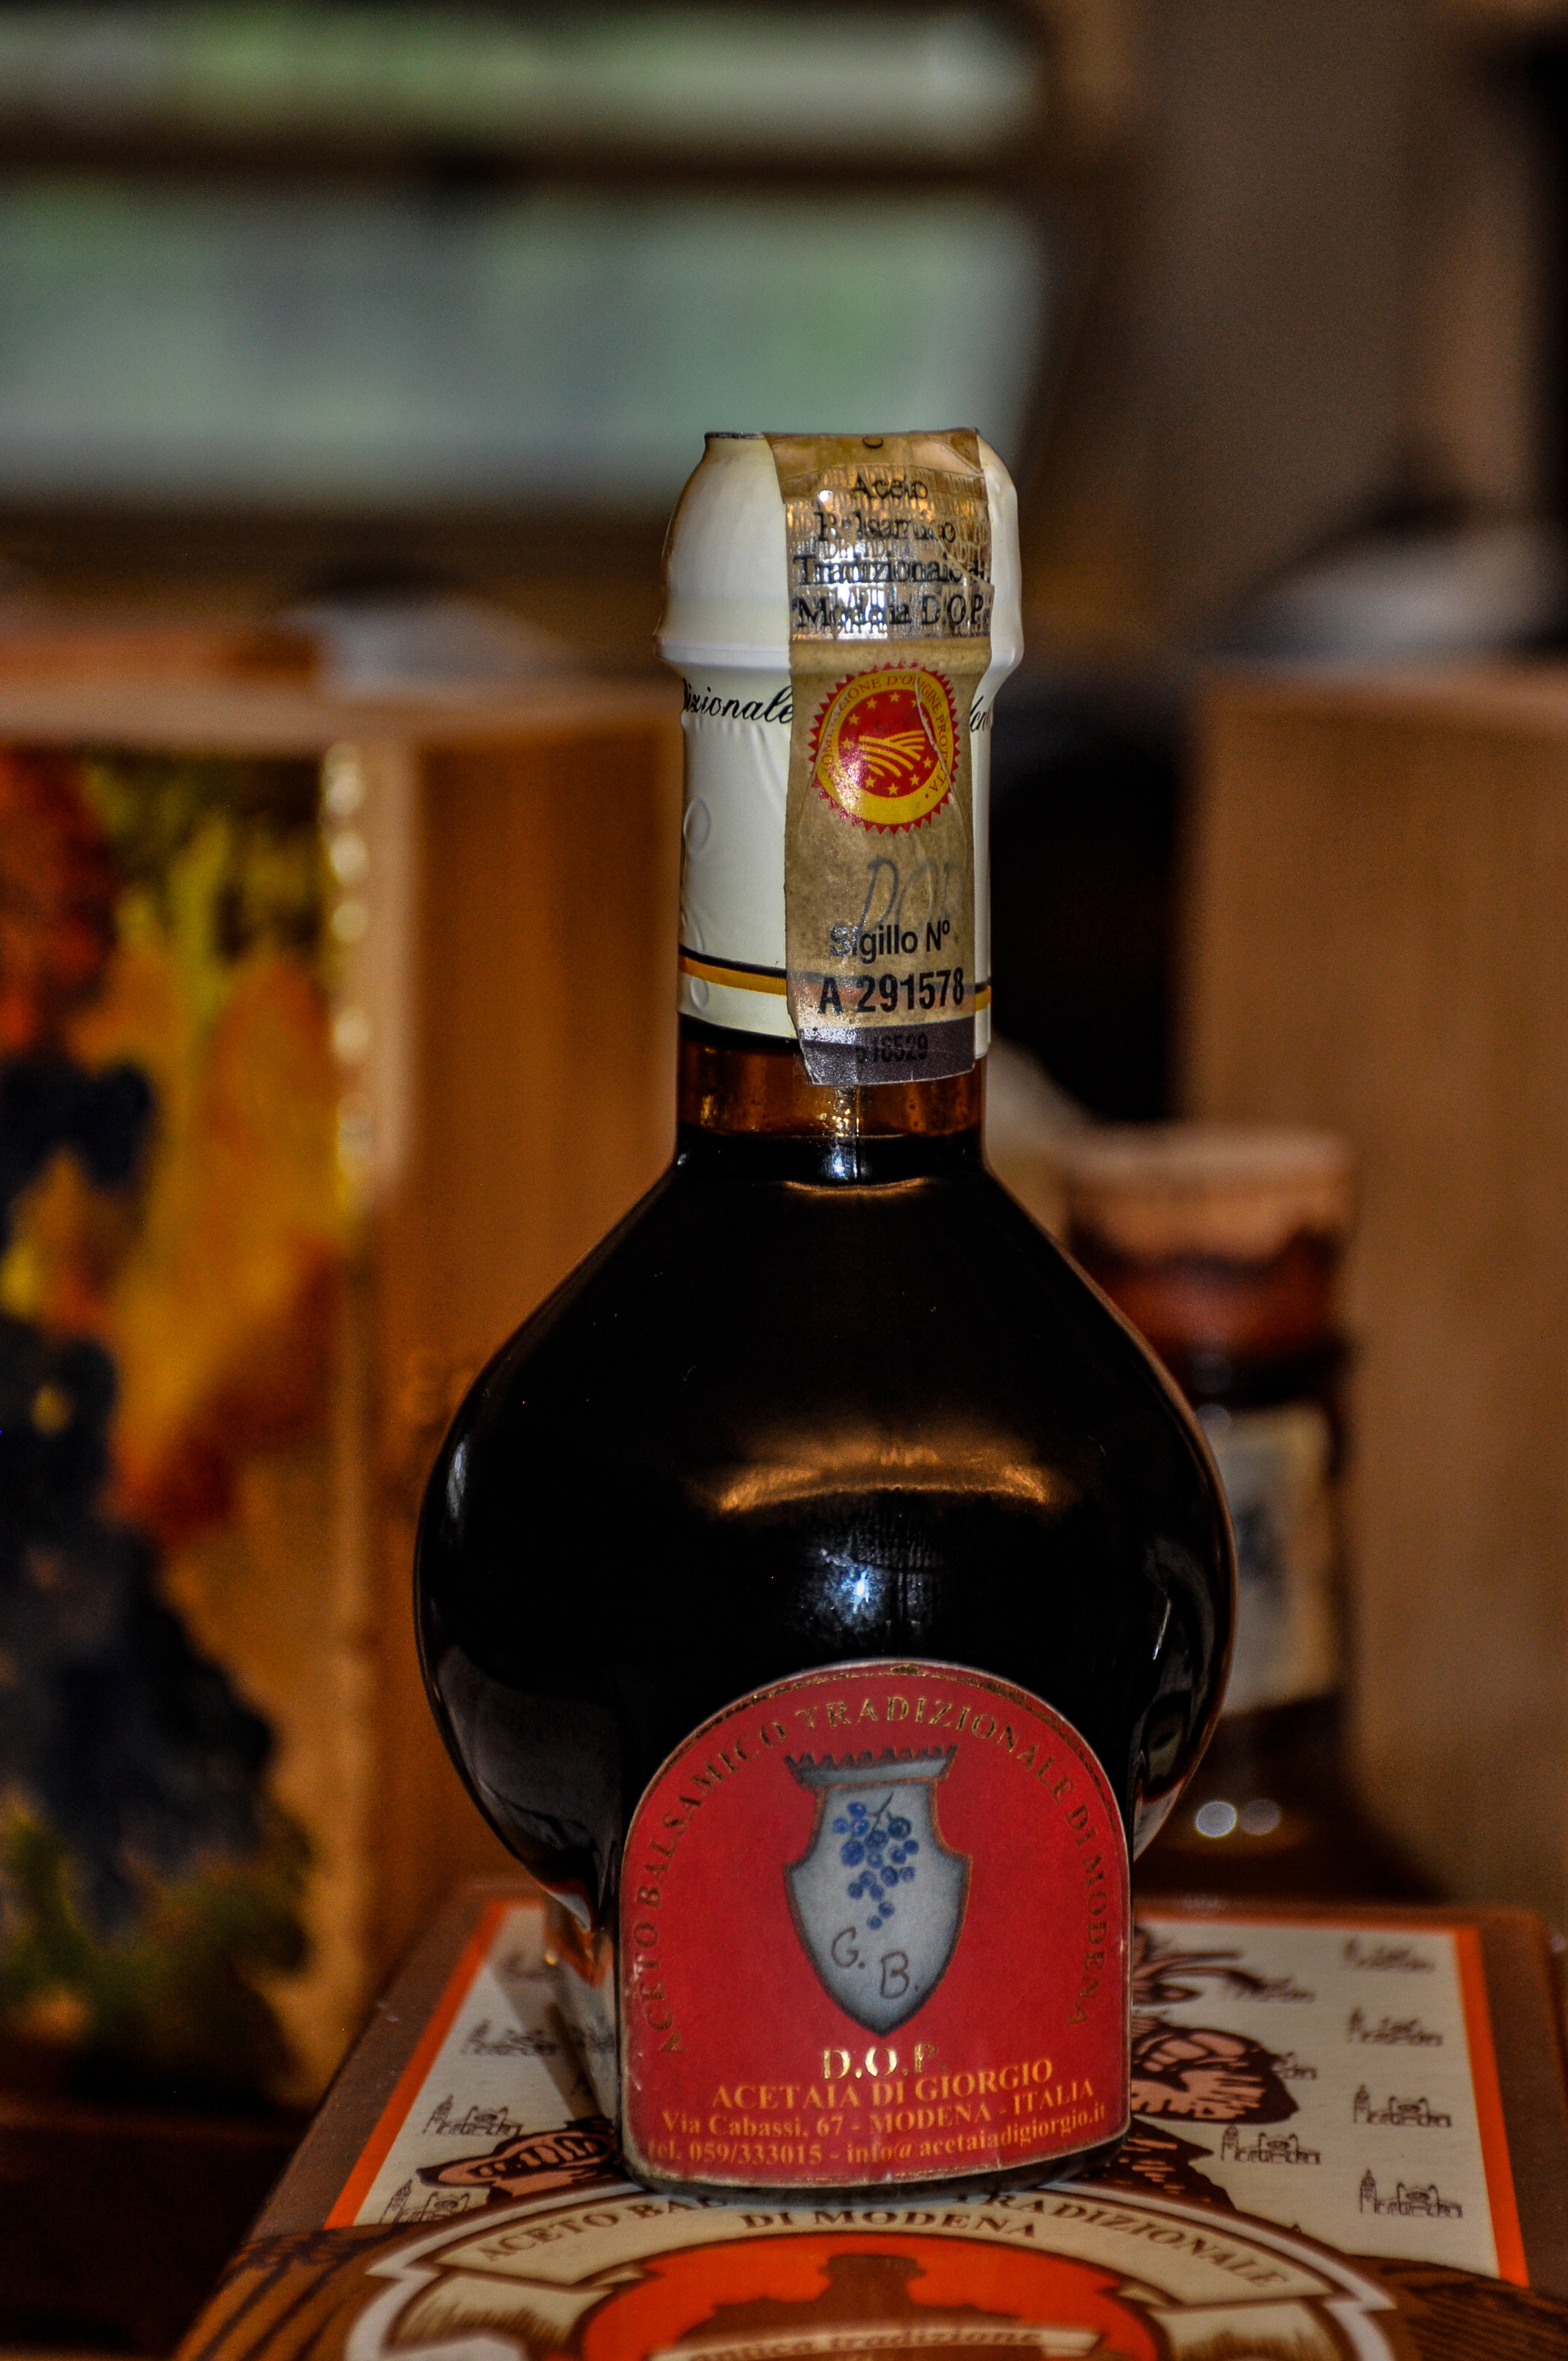 D.O.P. Balsamic Vinegar of Modena